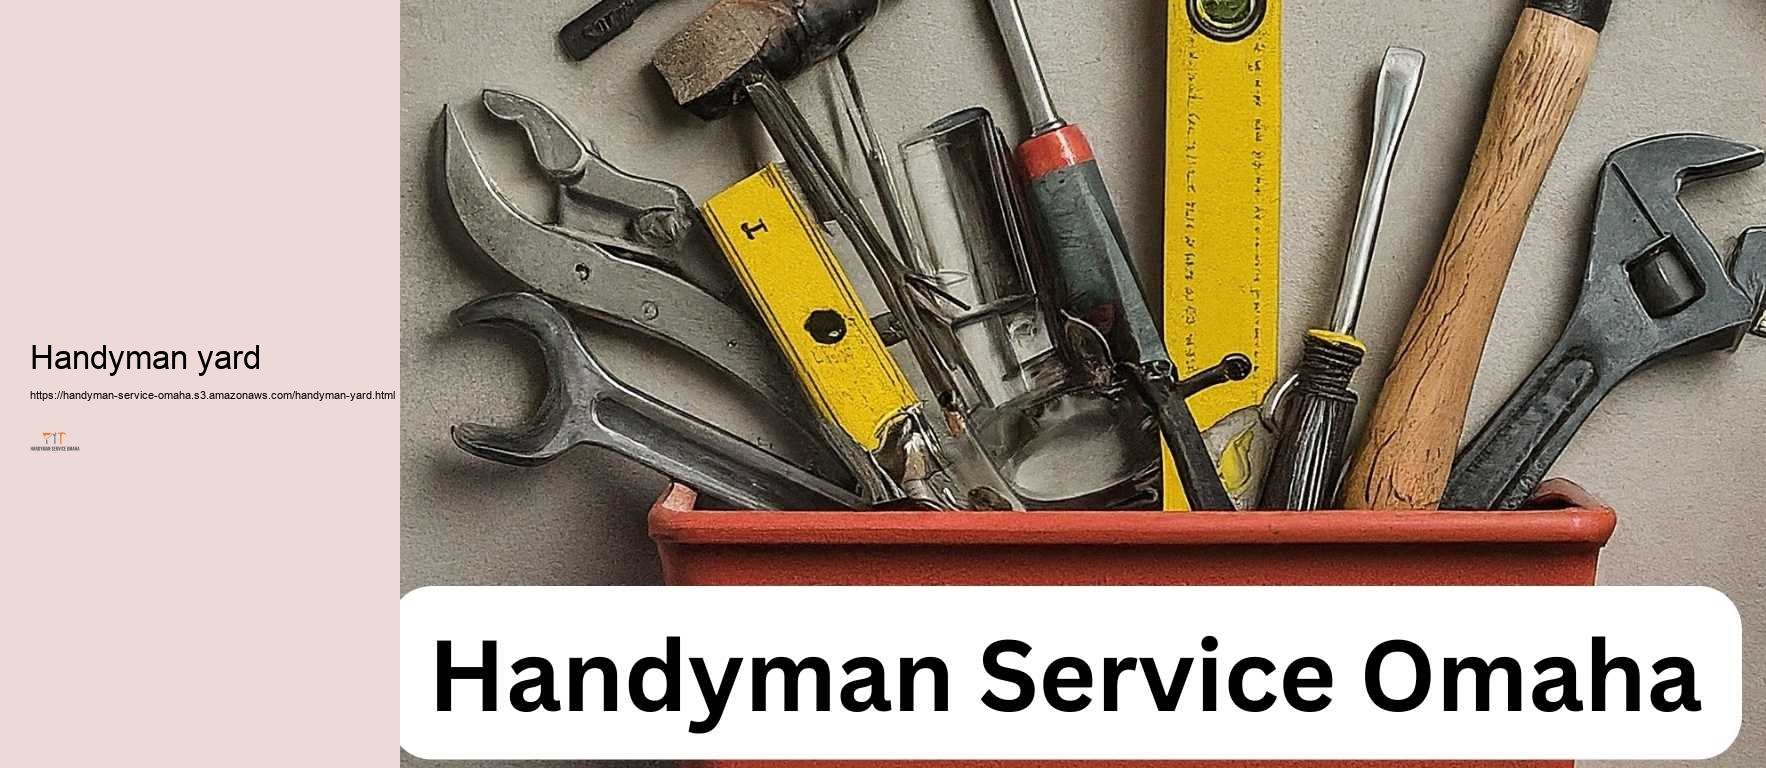 Handyman yard